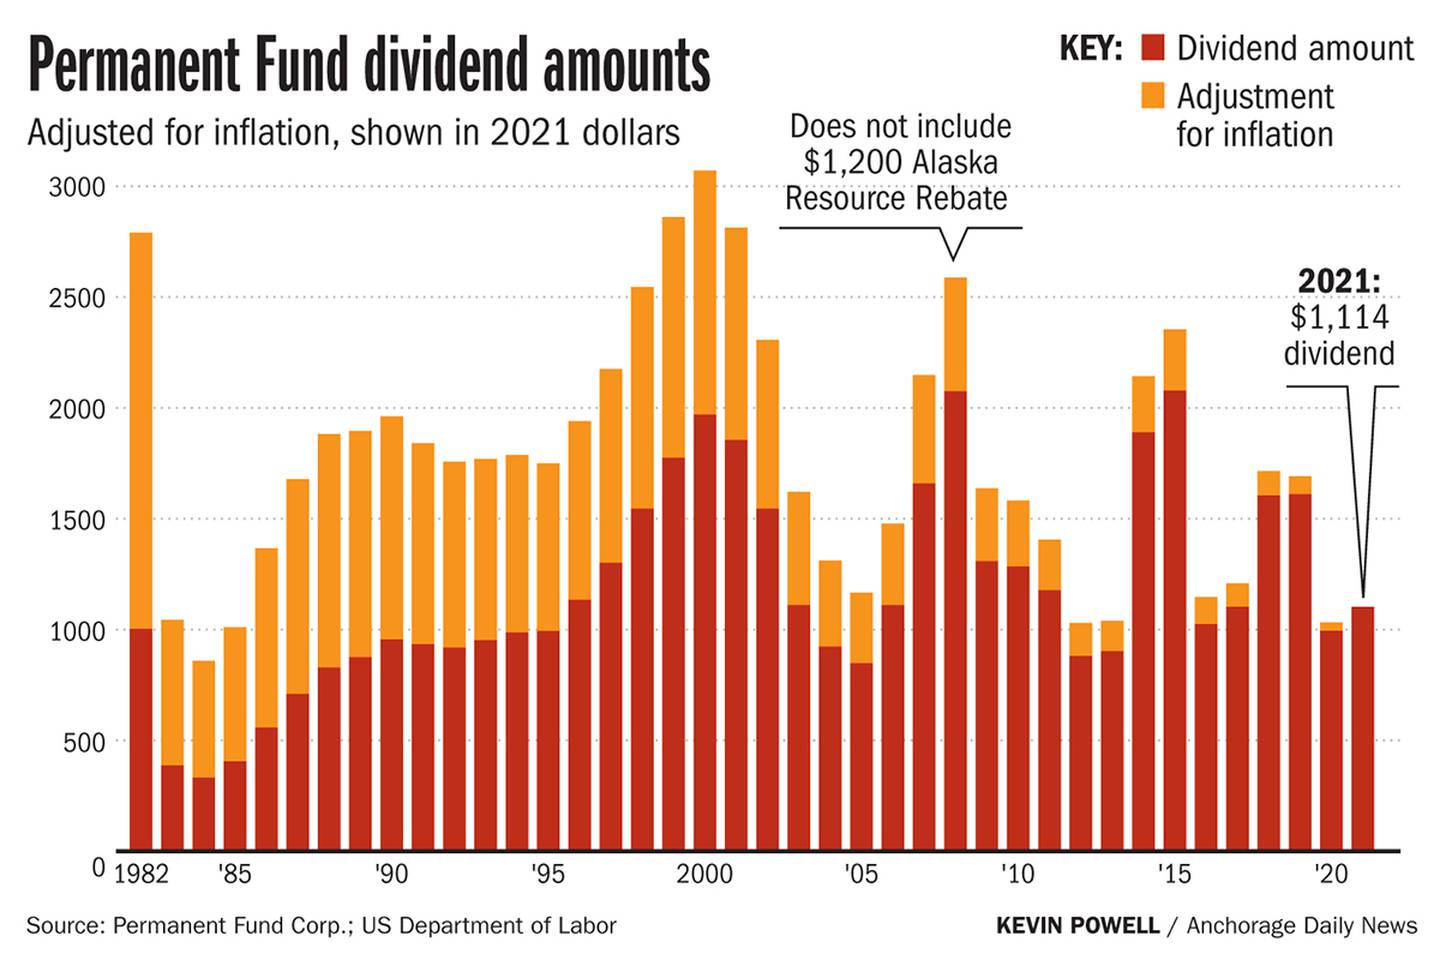 PFD Permanent Fund dividend amounts